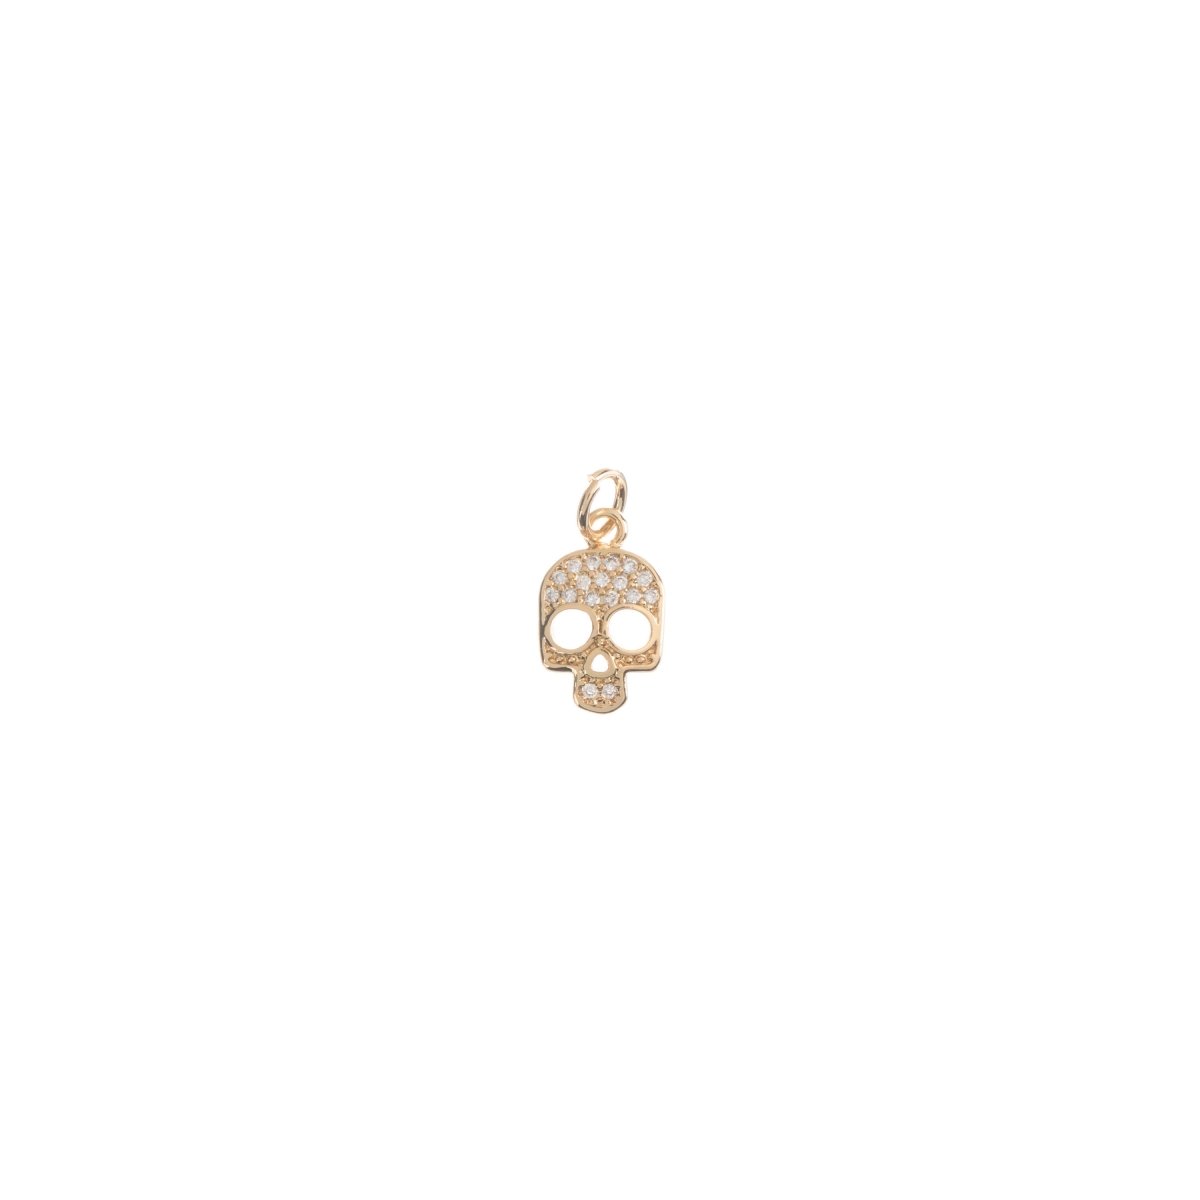 Dainty 18k Gold Filled Skull Human Bejeweled Skull, Bones, Cubic Zirconia Bracelet Charm, Necklace Pendant Huggie Earring Charm Supply C-210 - DLUXCA